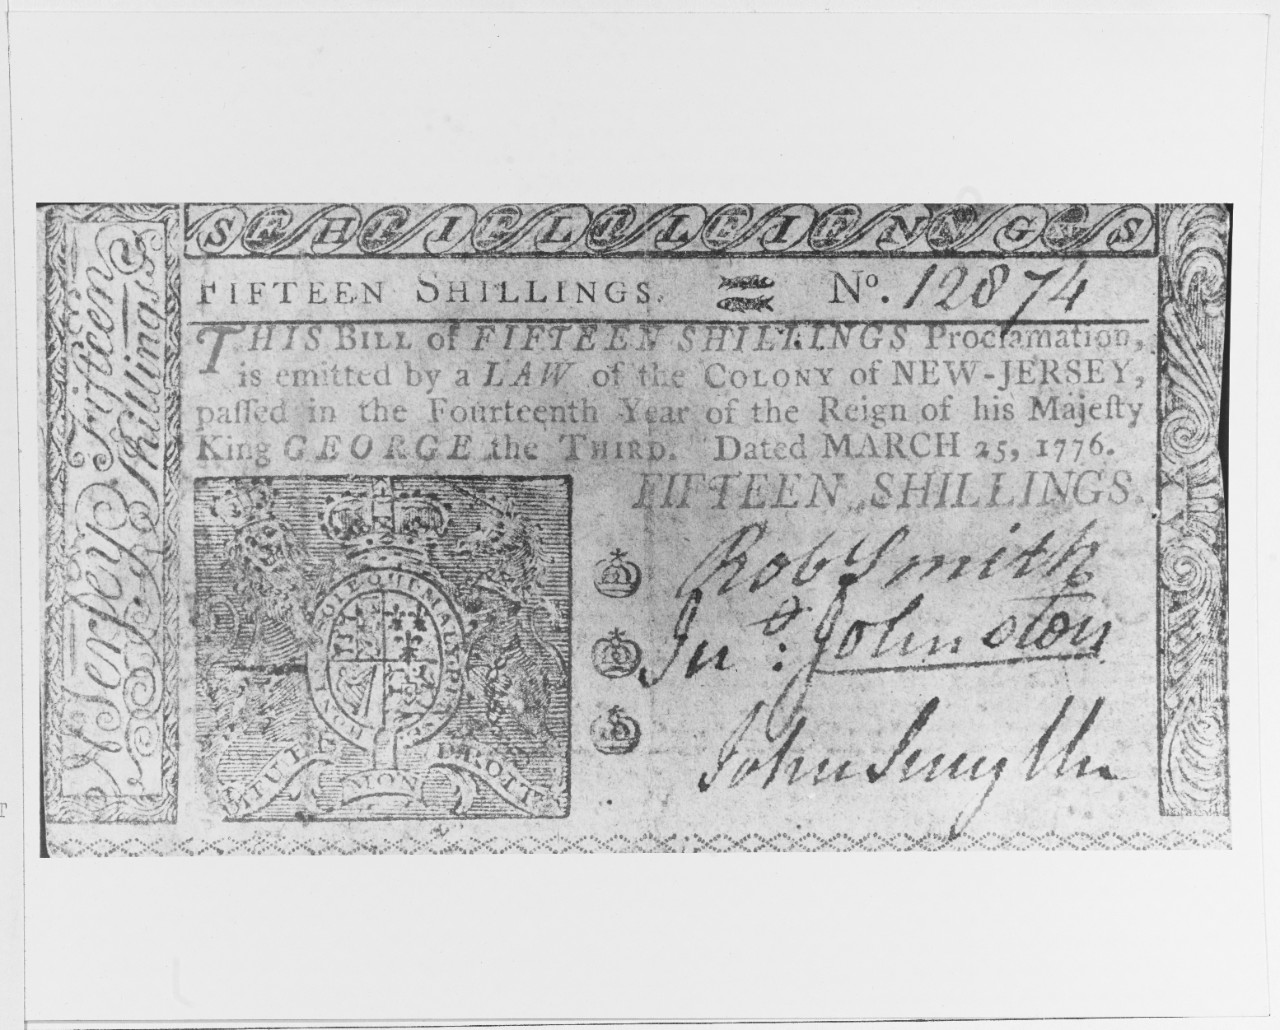 Fifteen shilling note